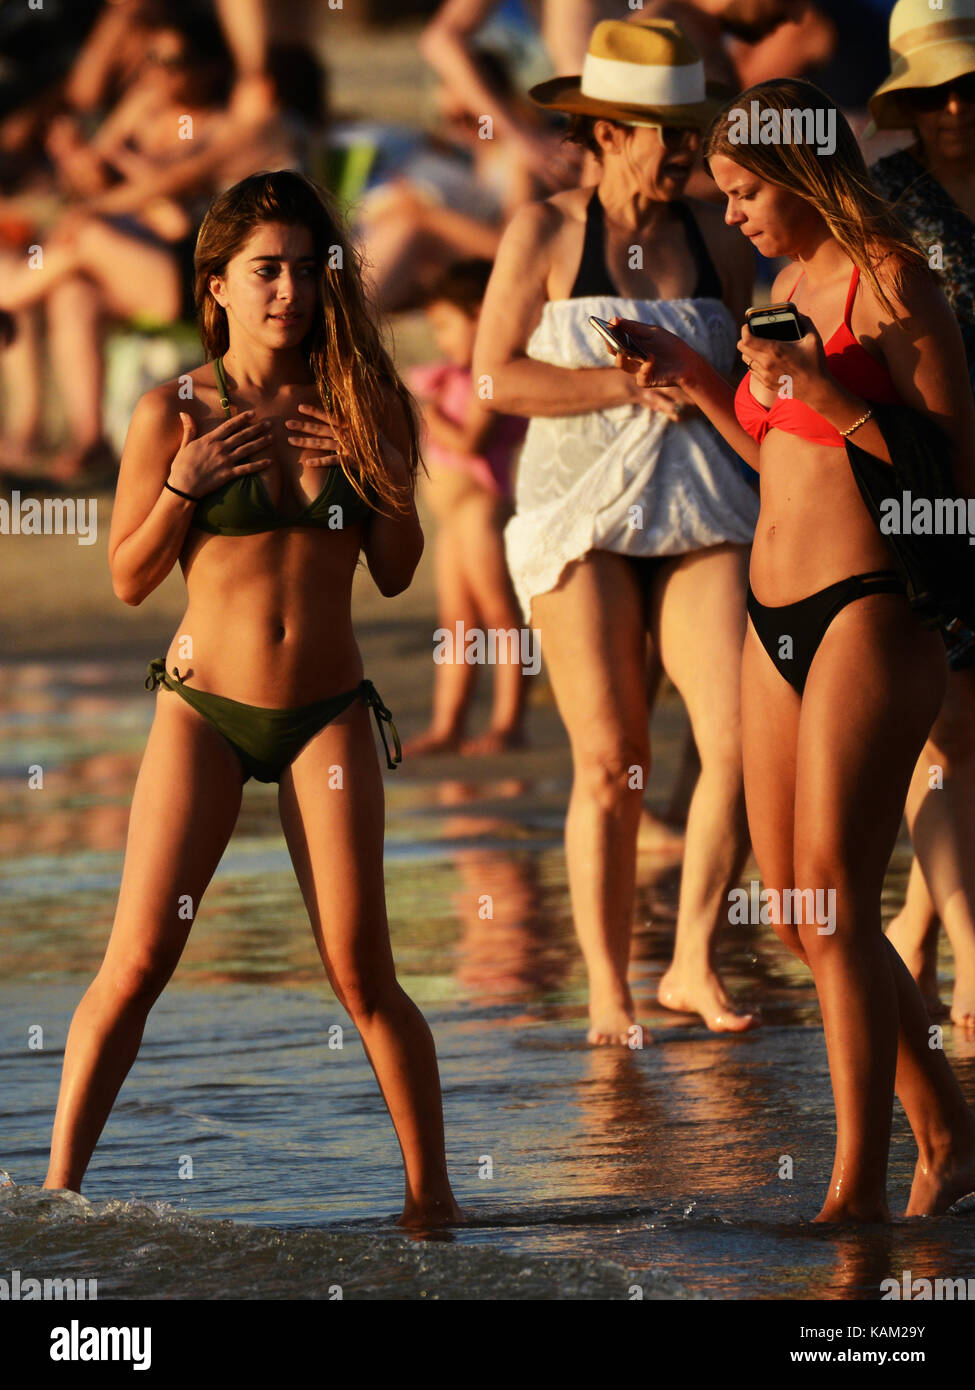 Israel bikini hi-res stock photography and images - Alamy